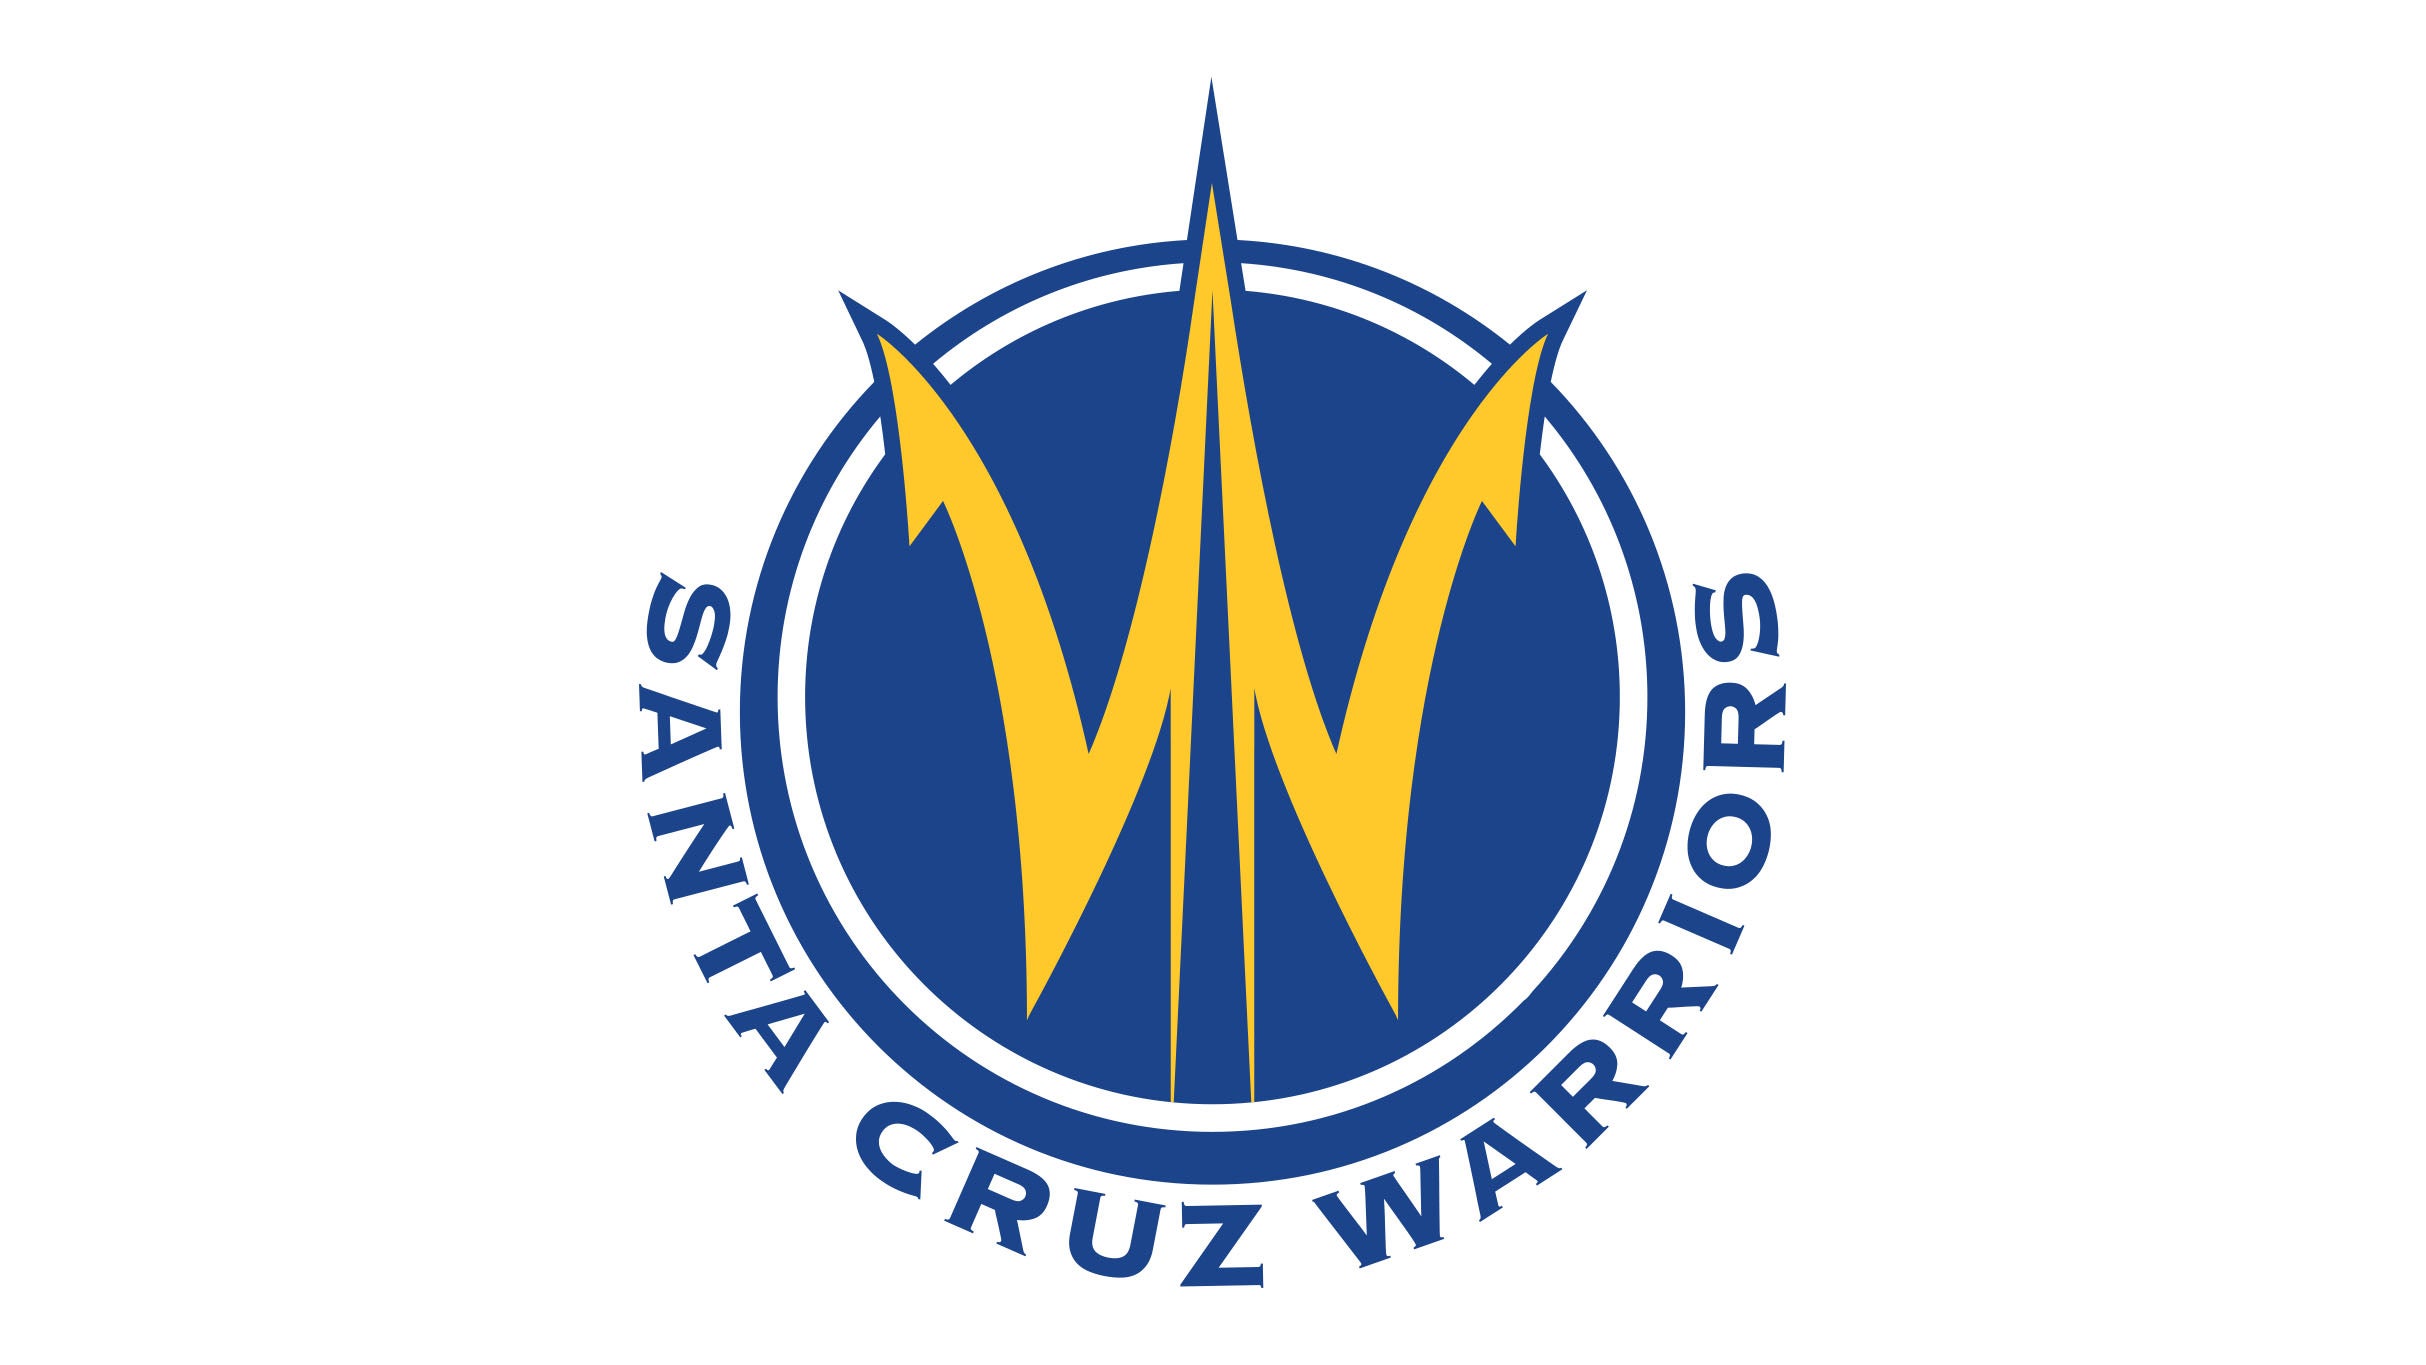 Santa Cruz Warriors vs. South Bay Lakers in Santa Cruz promo photo for Dub Club presale offer code